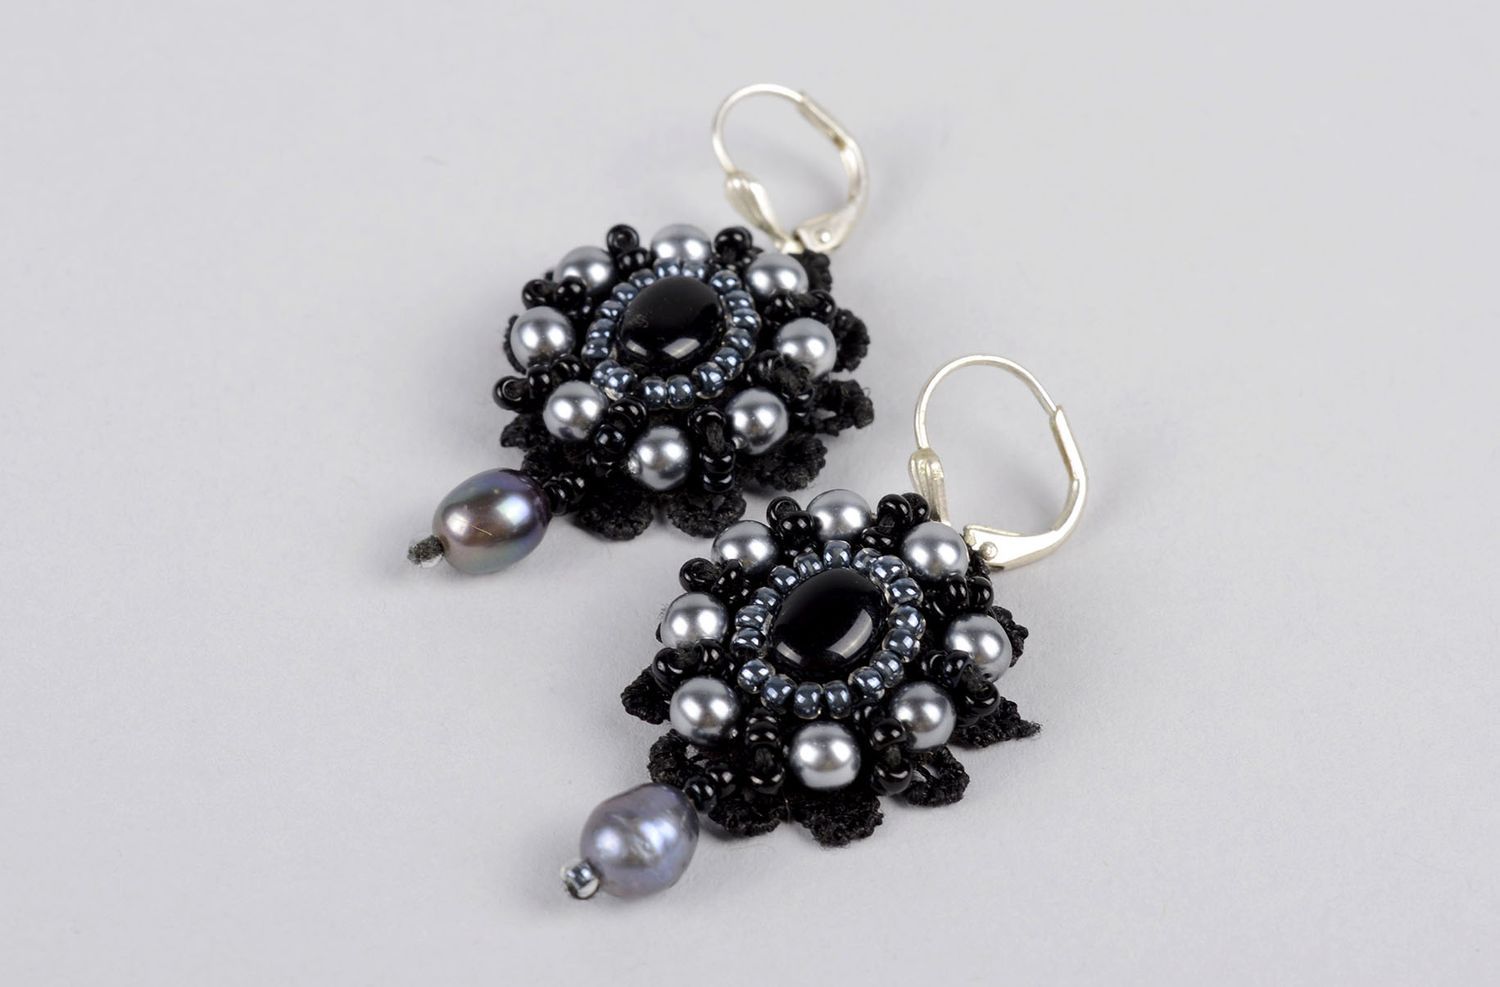 Handmade beaded earrings with charms long earrings with beads fashion jewelry photo 2